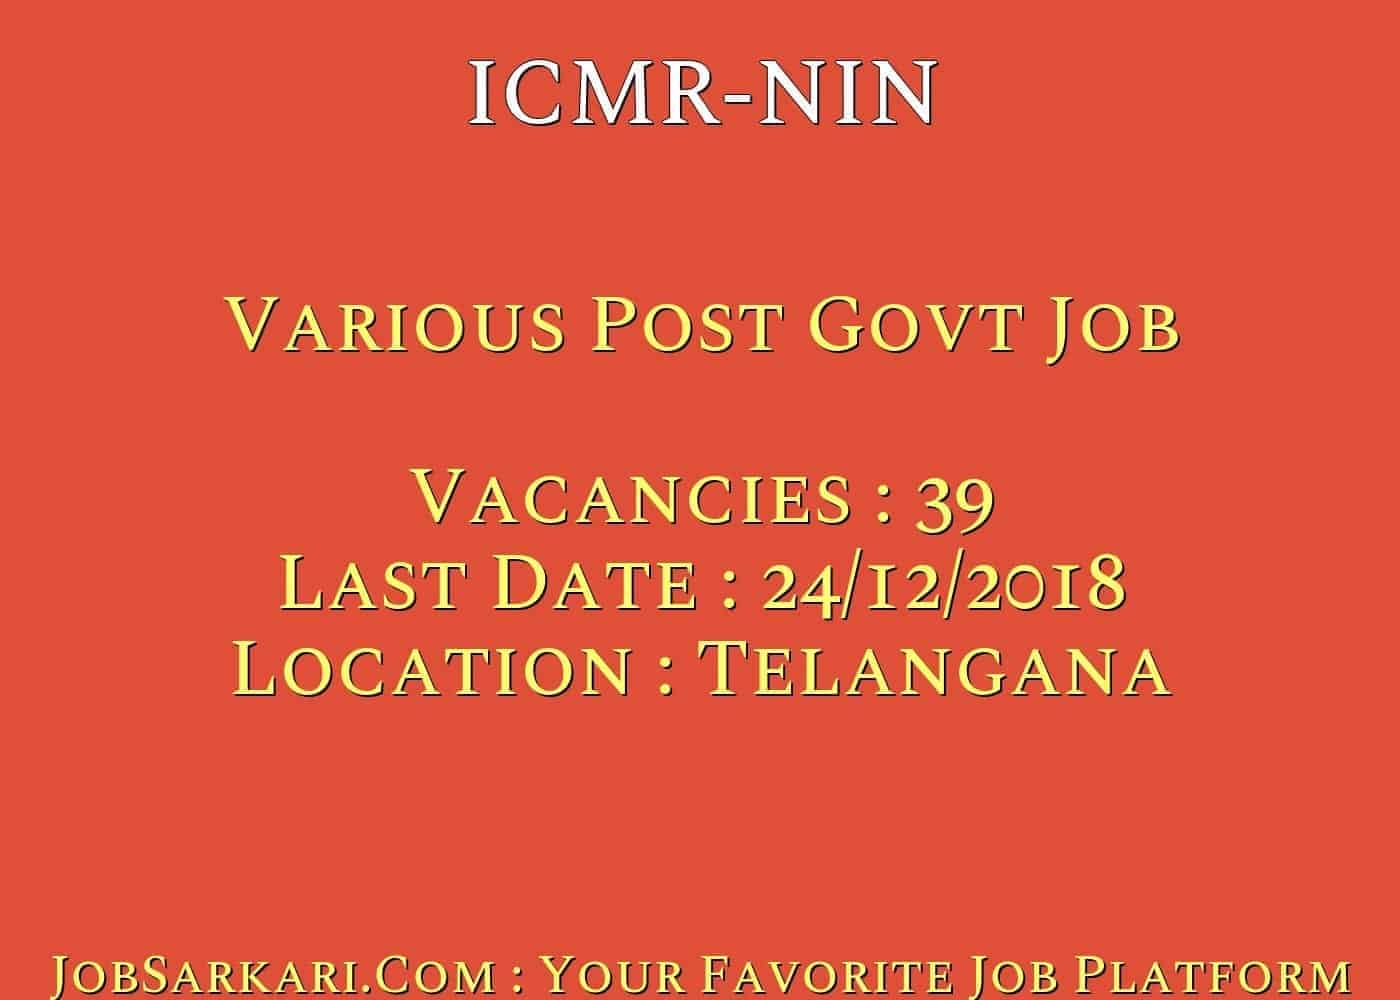 ICMR-NIN Recruitment 2018 For Various Post Govt Job